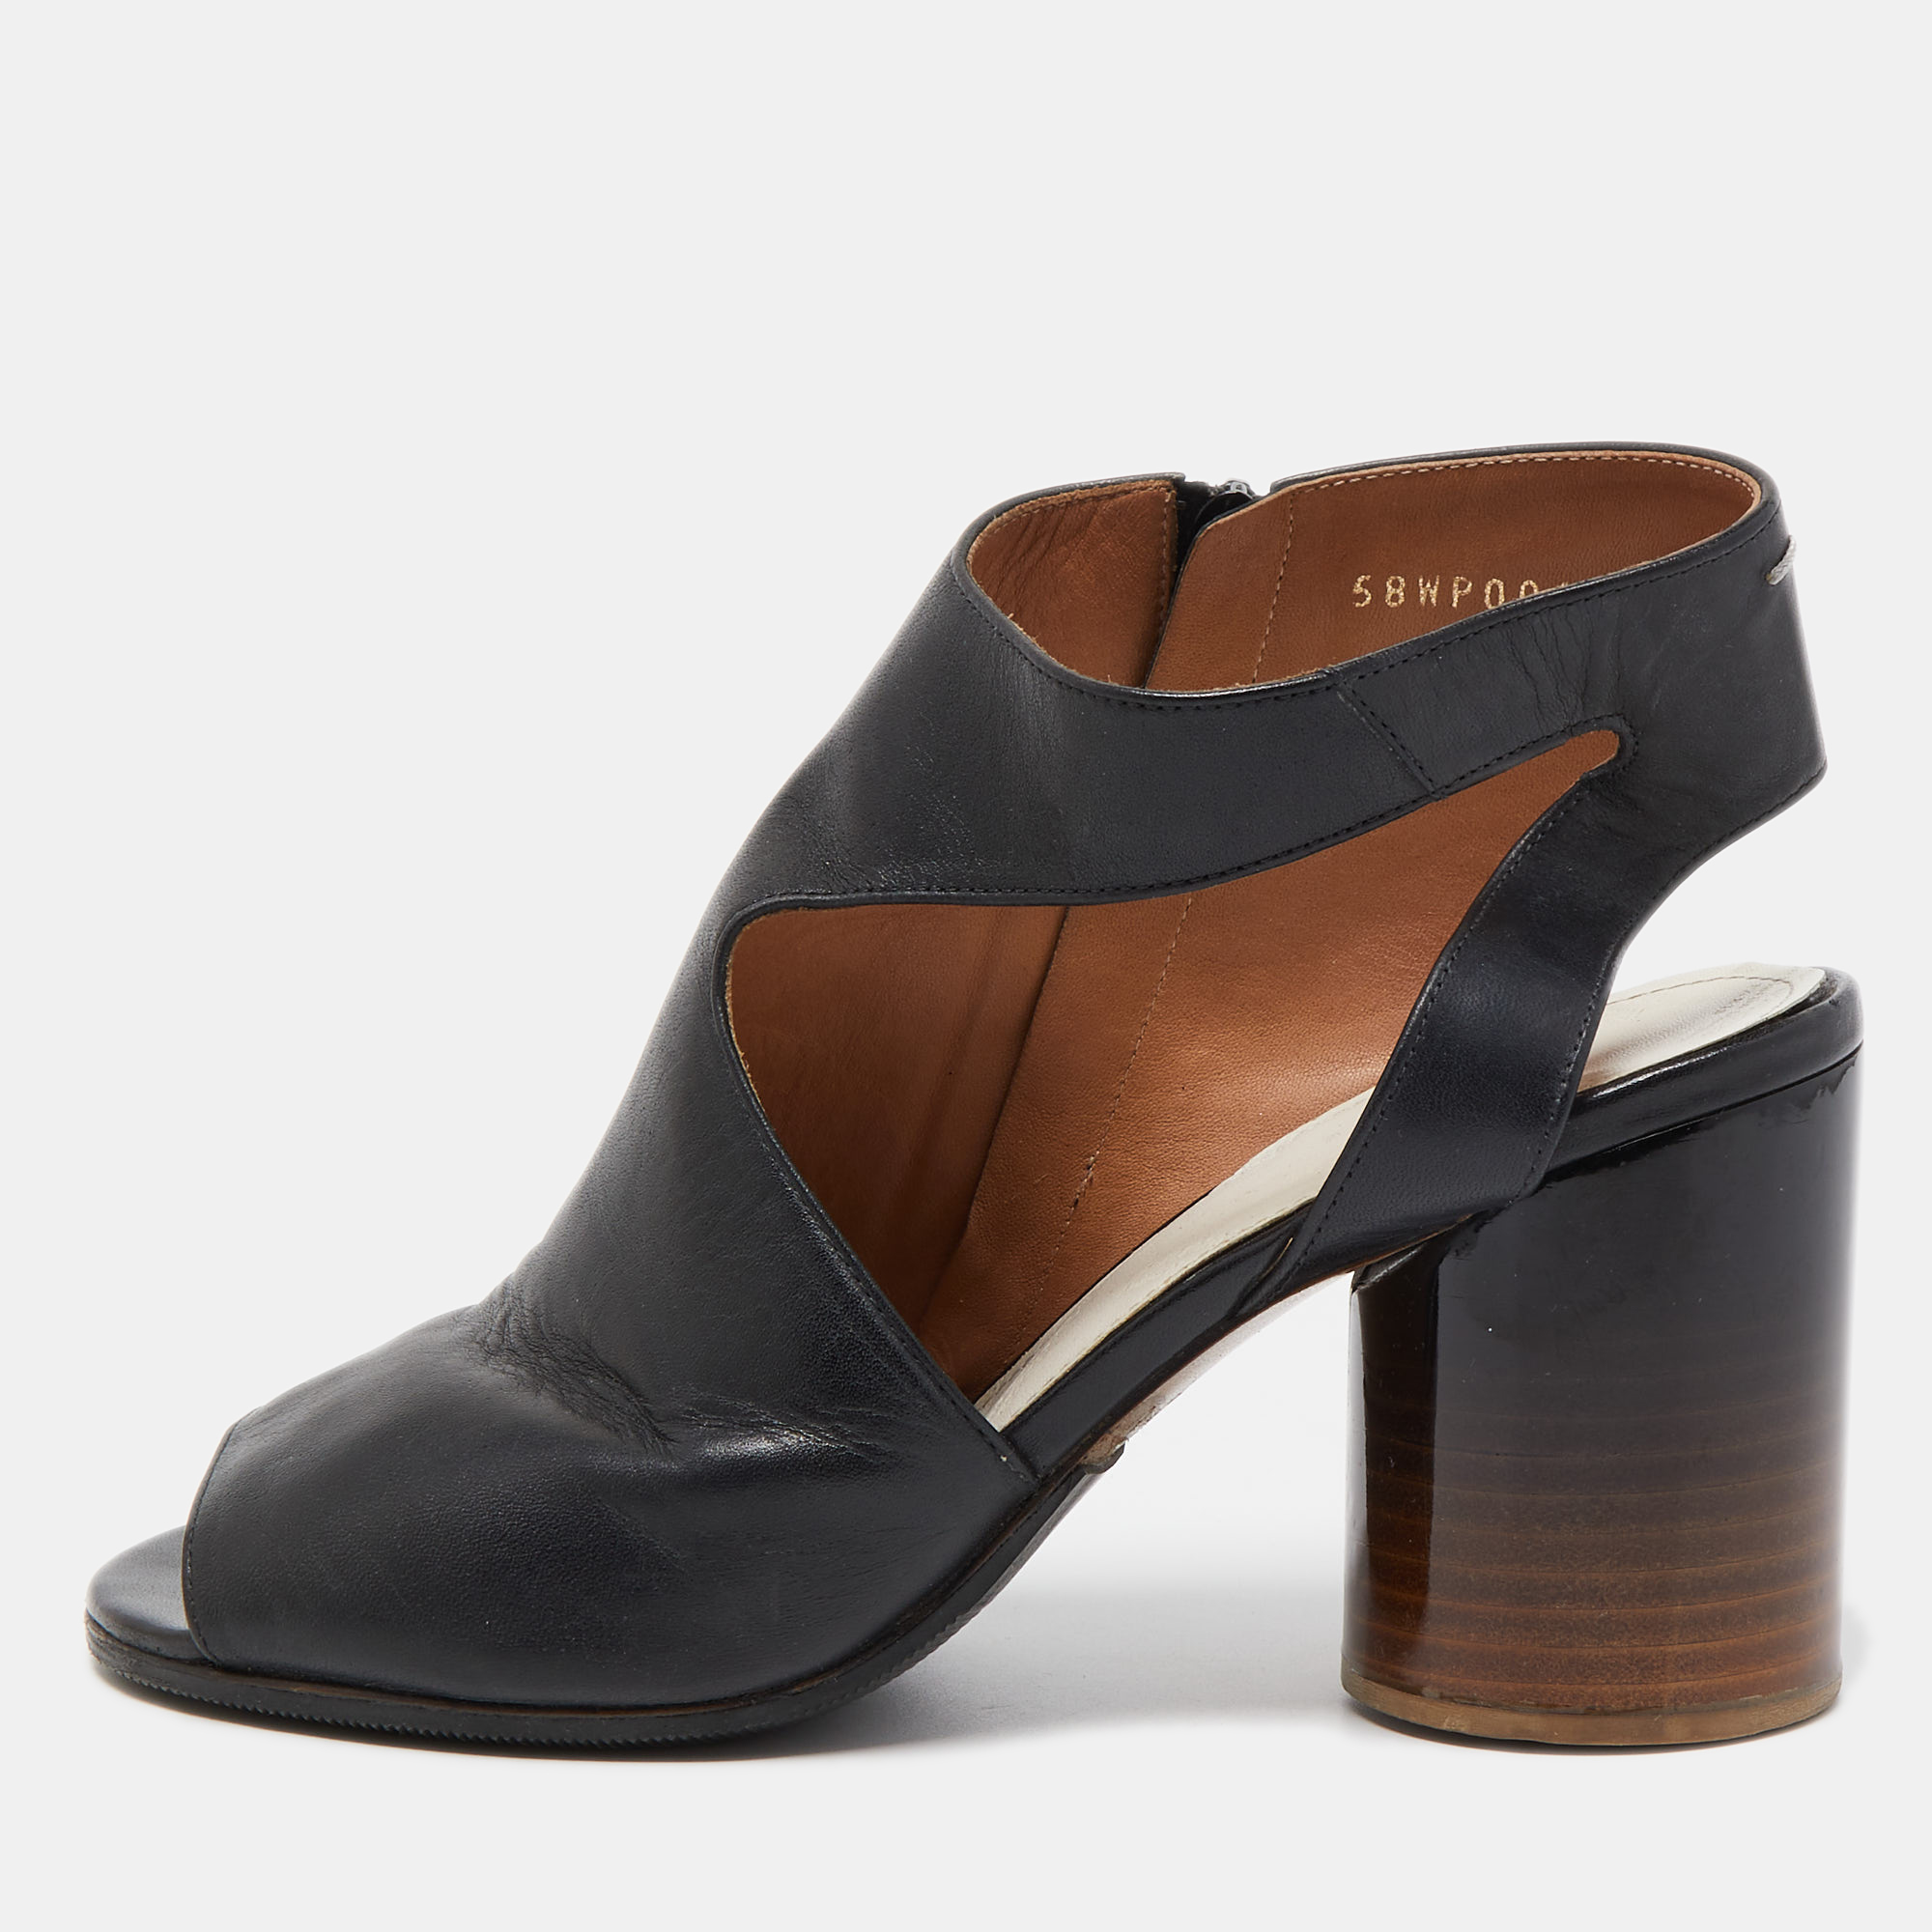 Pre-owned Maison Margiela Black Leather Open Toe Sandals Size 37